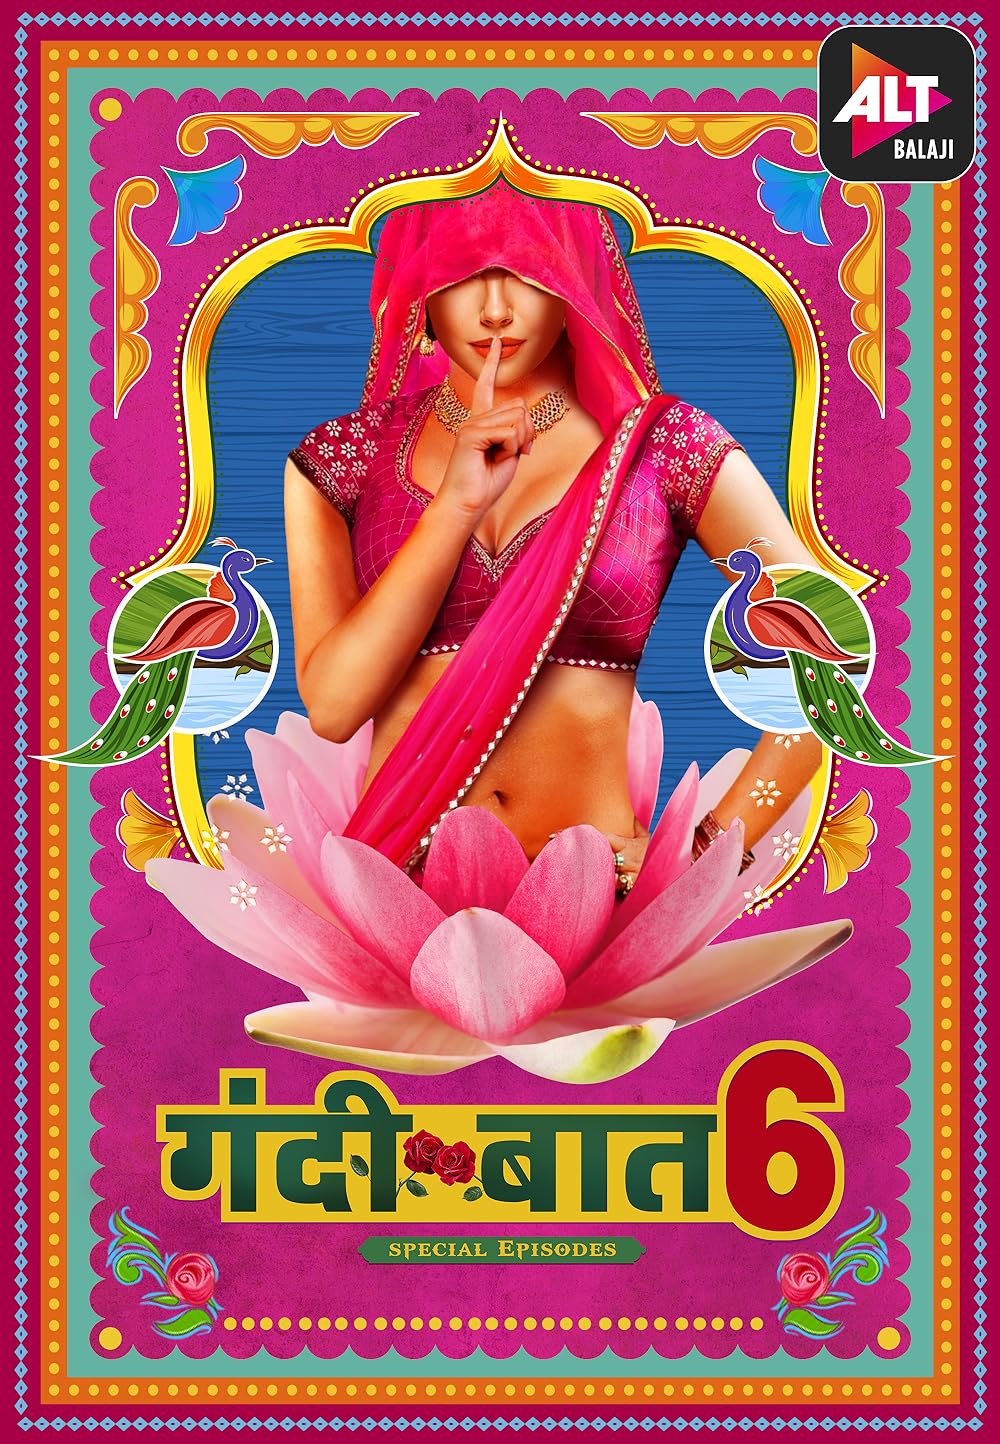 Download Gandi Baat 2020 (Season 5) Hindi {ALT Balaji Series} All Episodes WeB-DL || 480p [150MB]  || 720p [500MB] || 1080p [1GB]